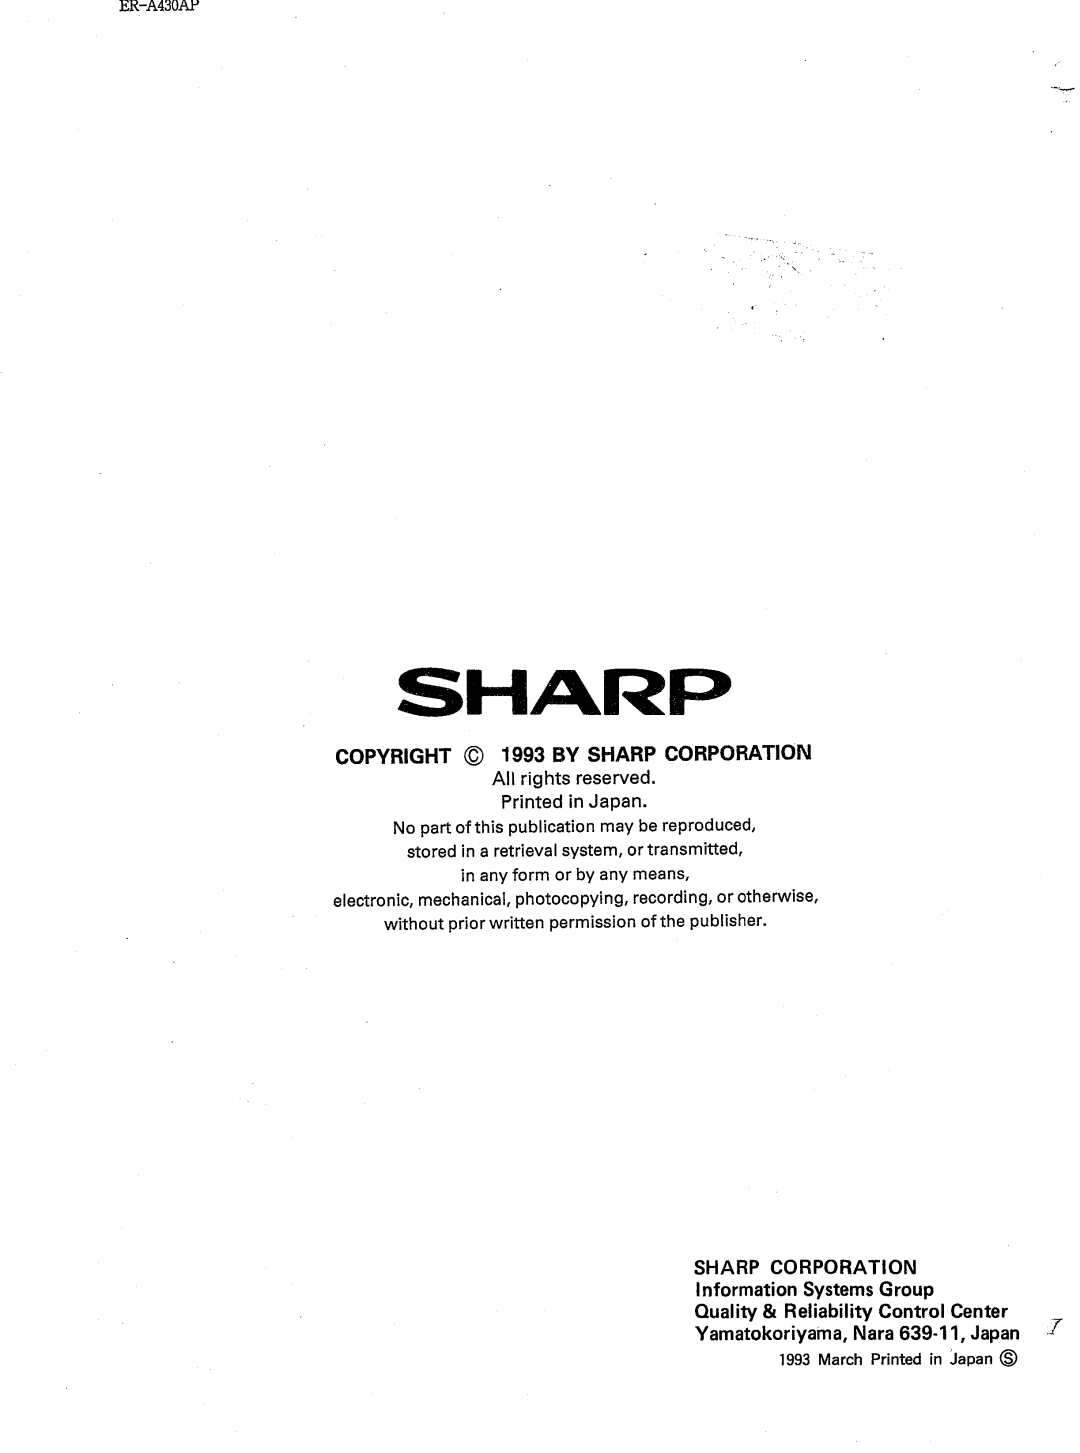 Sharp ER-A430 manual 